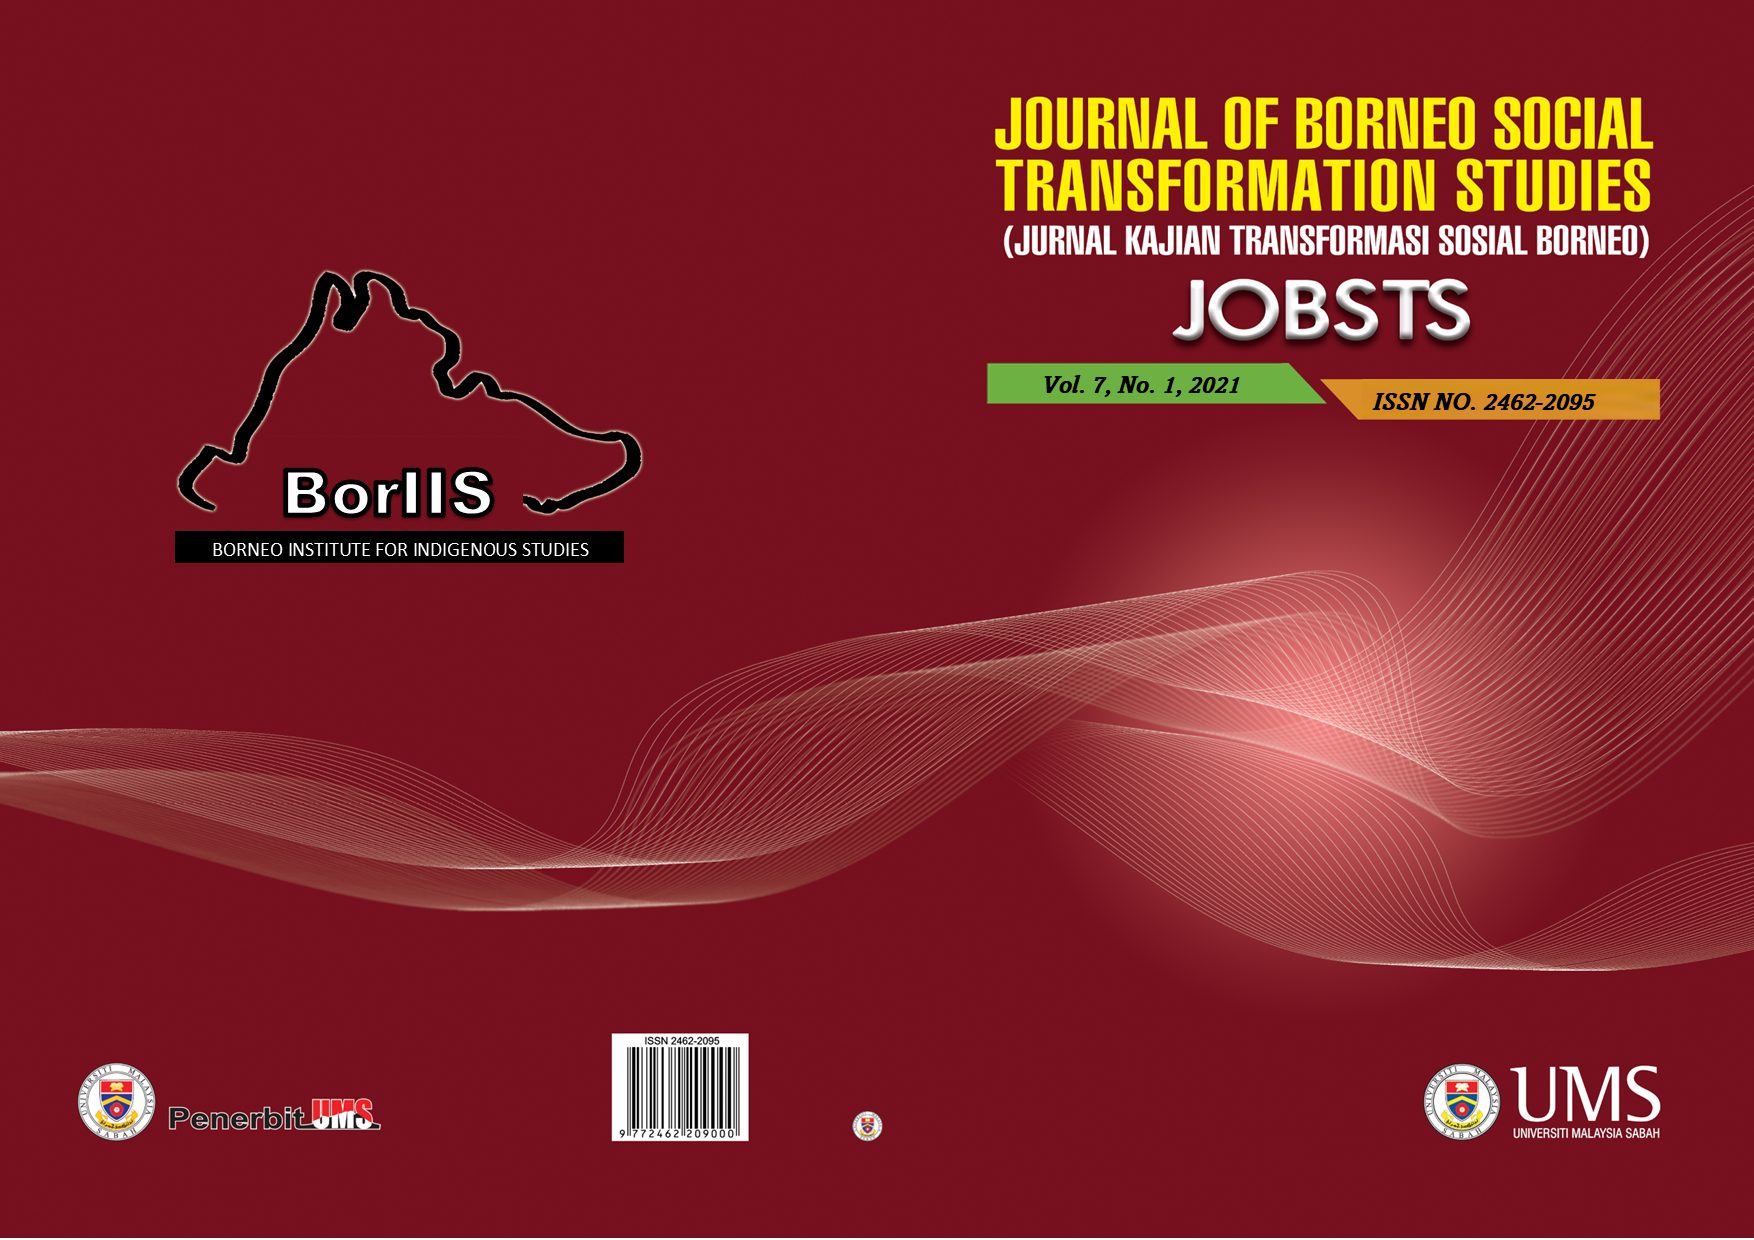 					View Vol. 7 No. 1 (2021): Journal of Borneo Social Transformation Studies (JOBSTS)
				